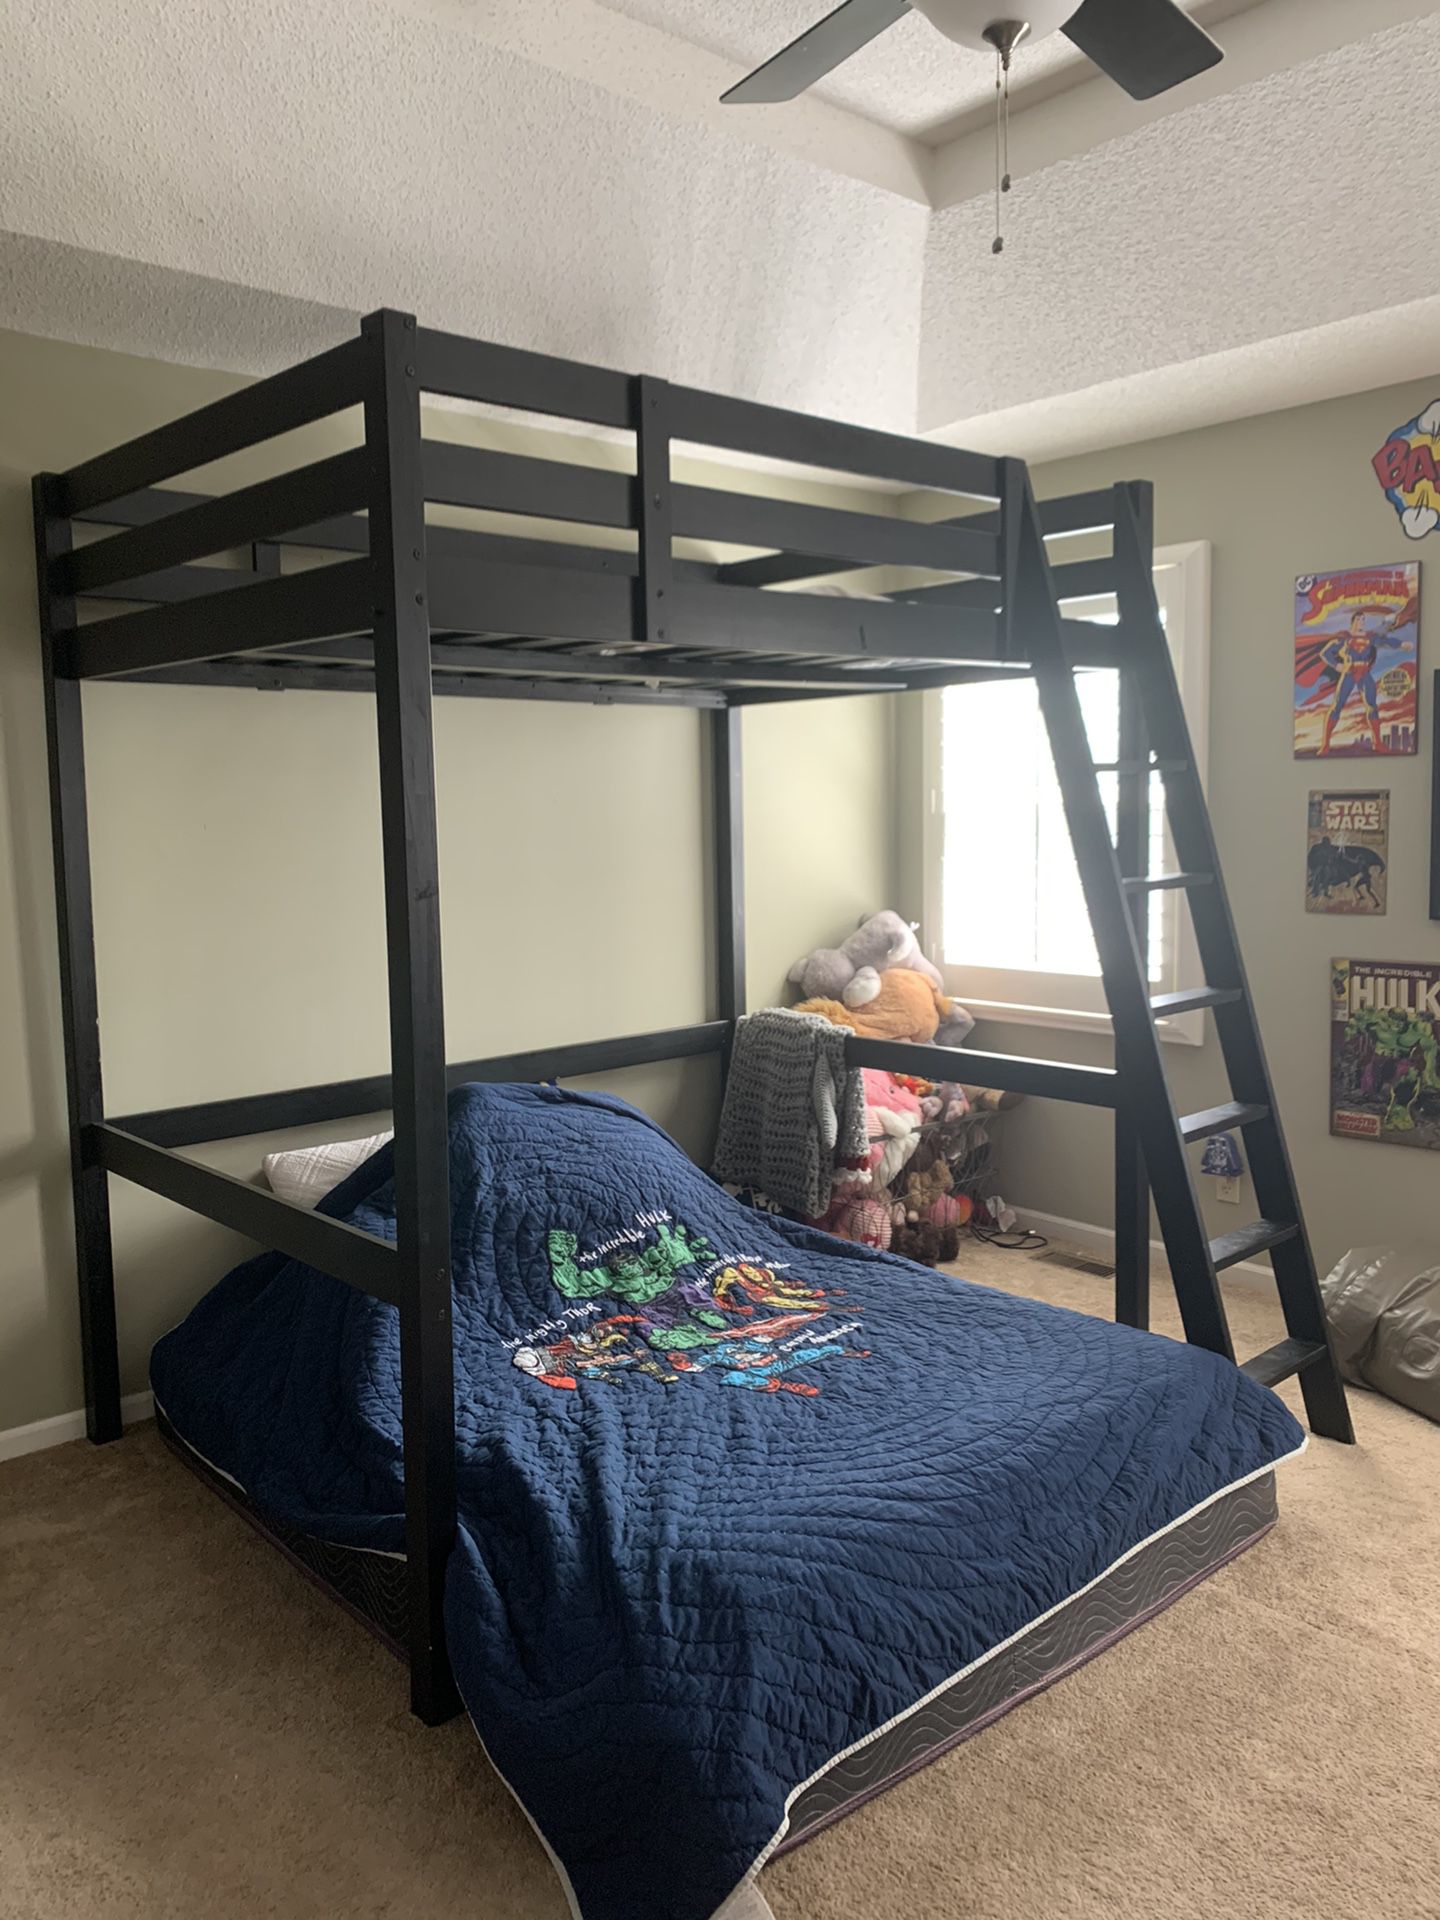 Loft style bunk bed